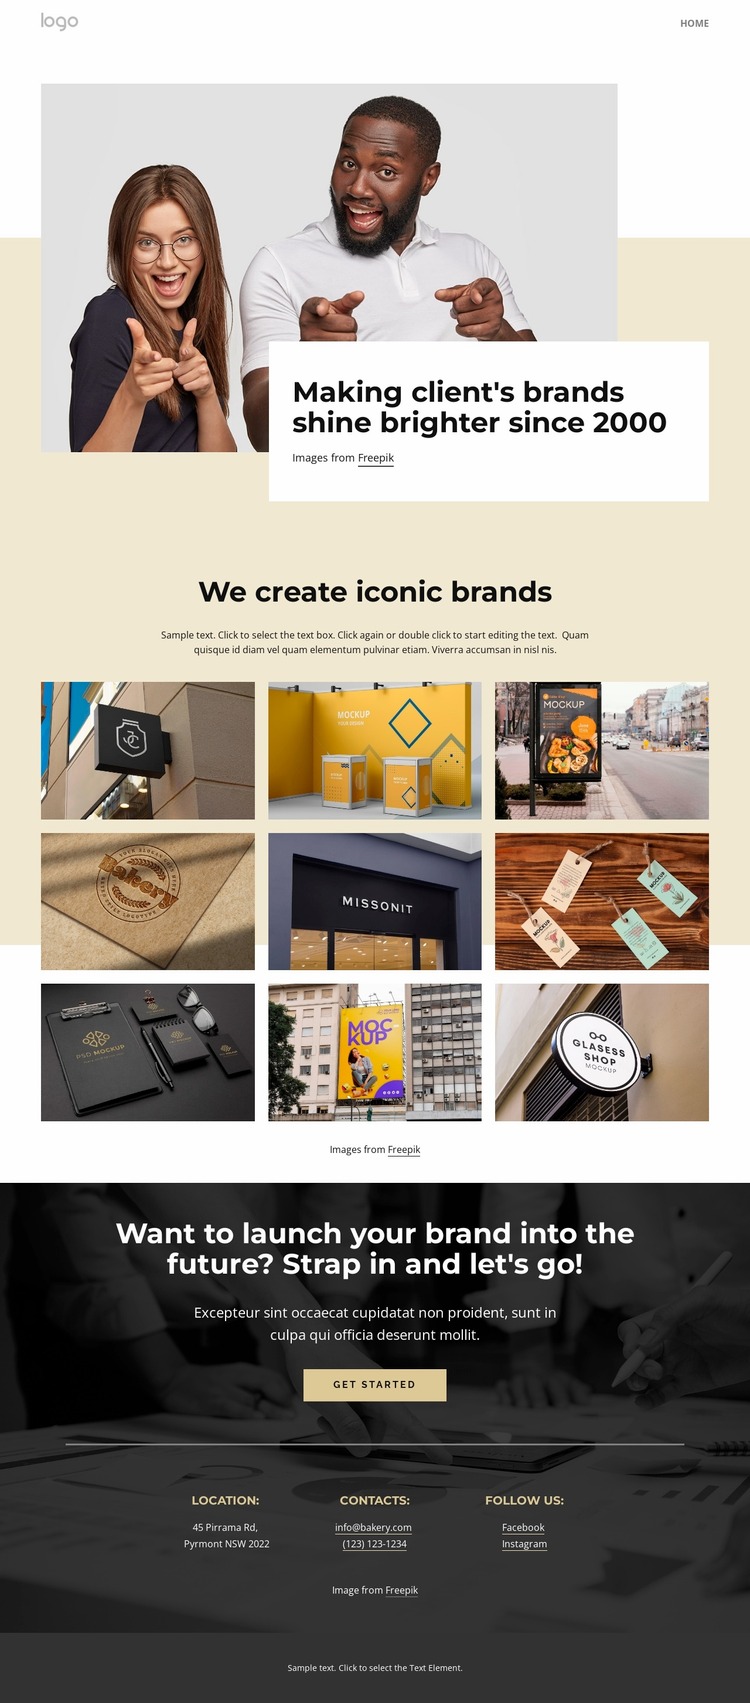 We create iconic brands Website Mockup